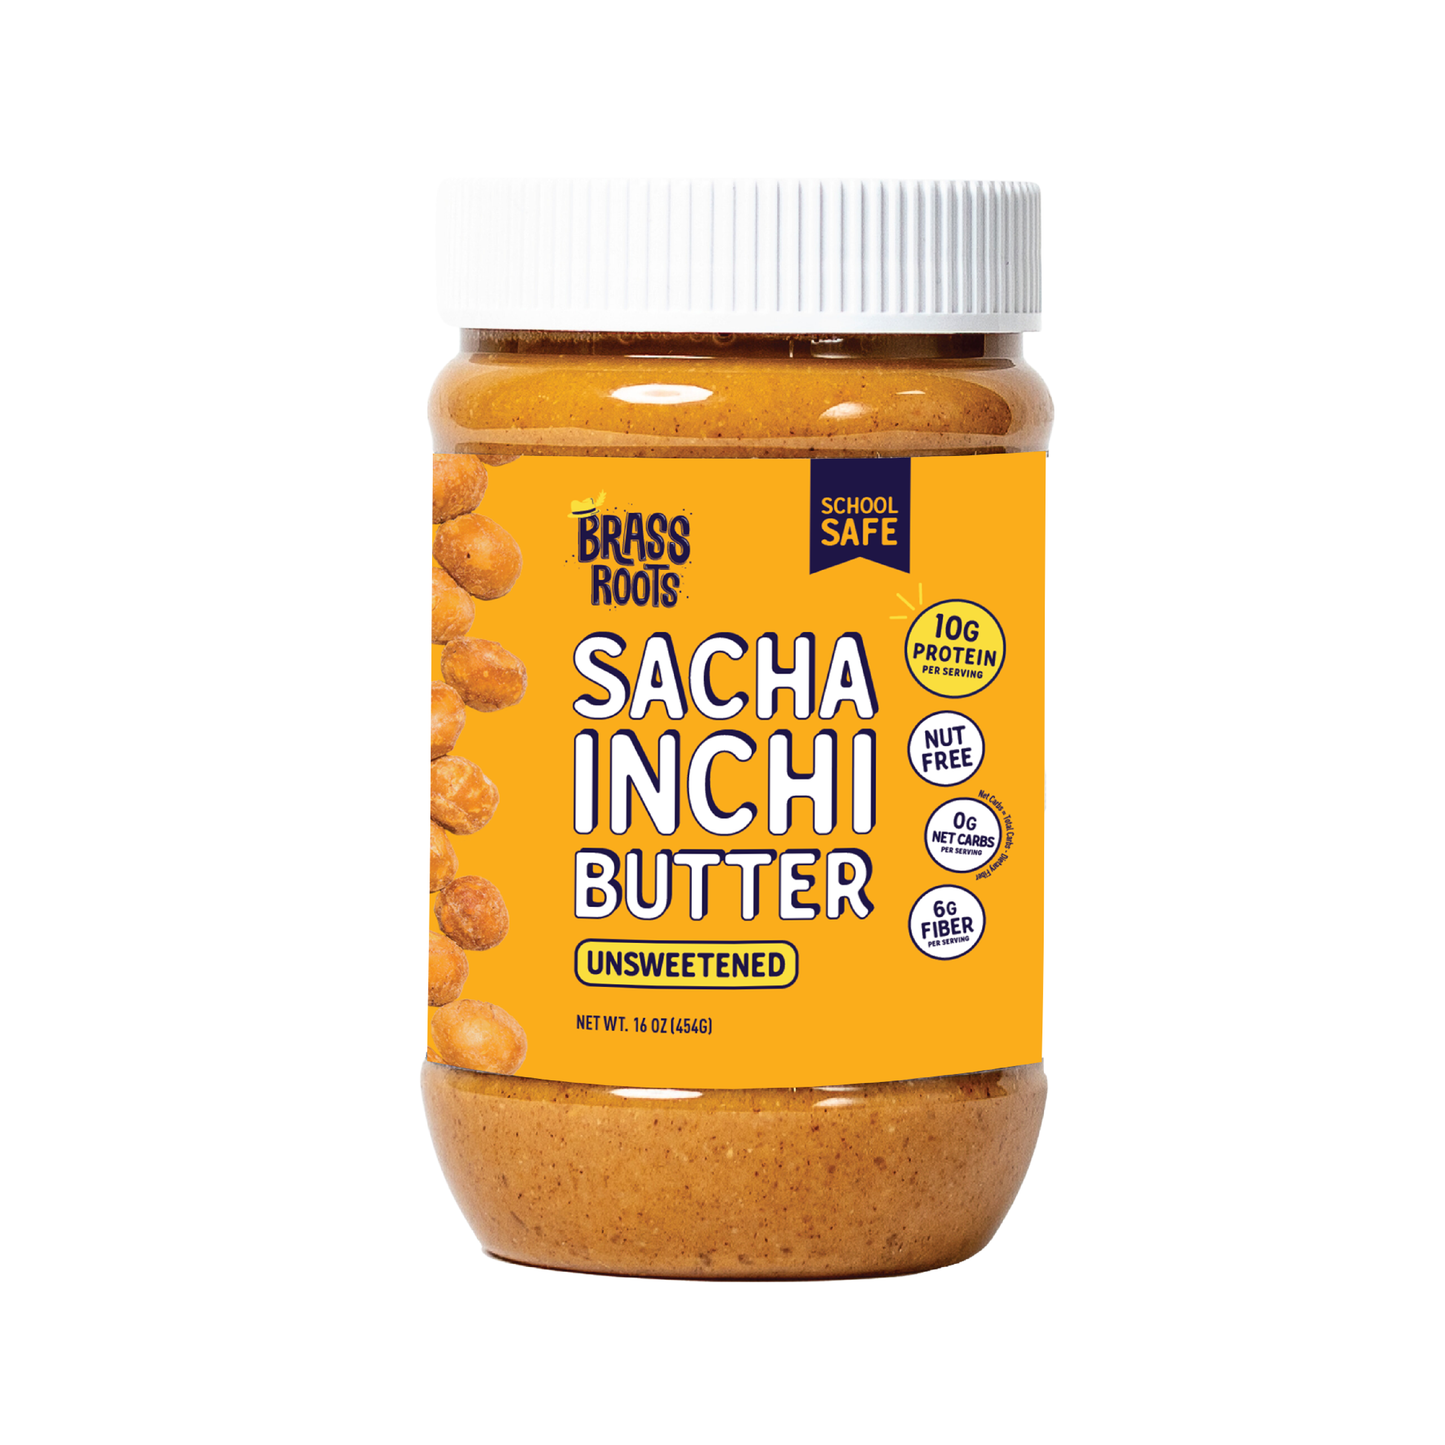 Sacha Inchi Butter - 16oz jar - Unsweetened